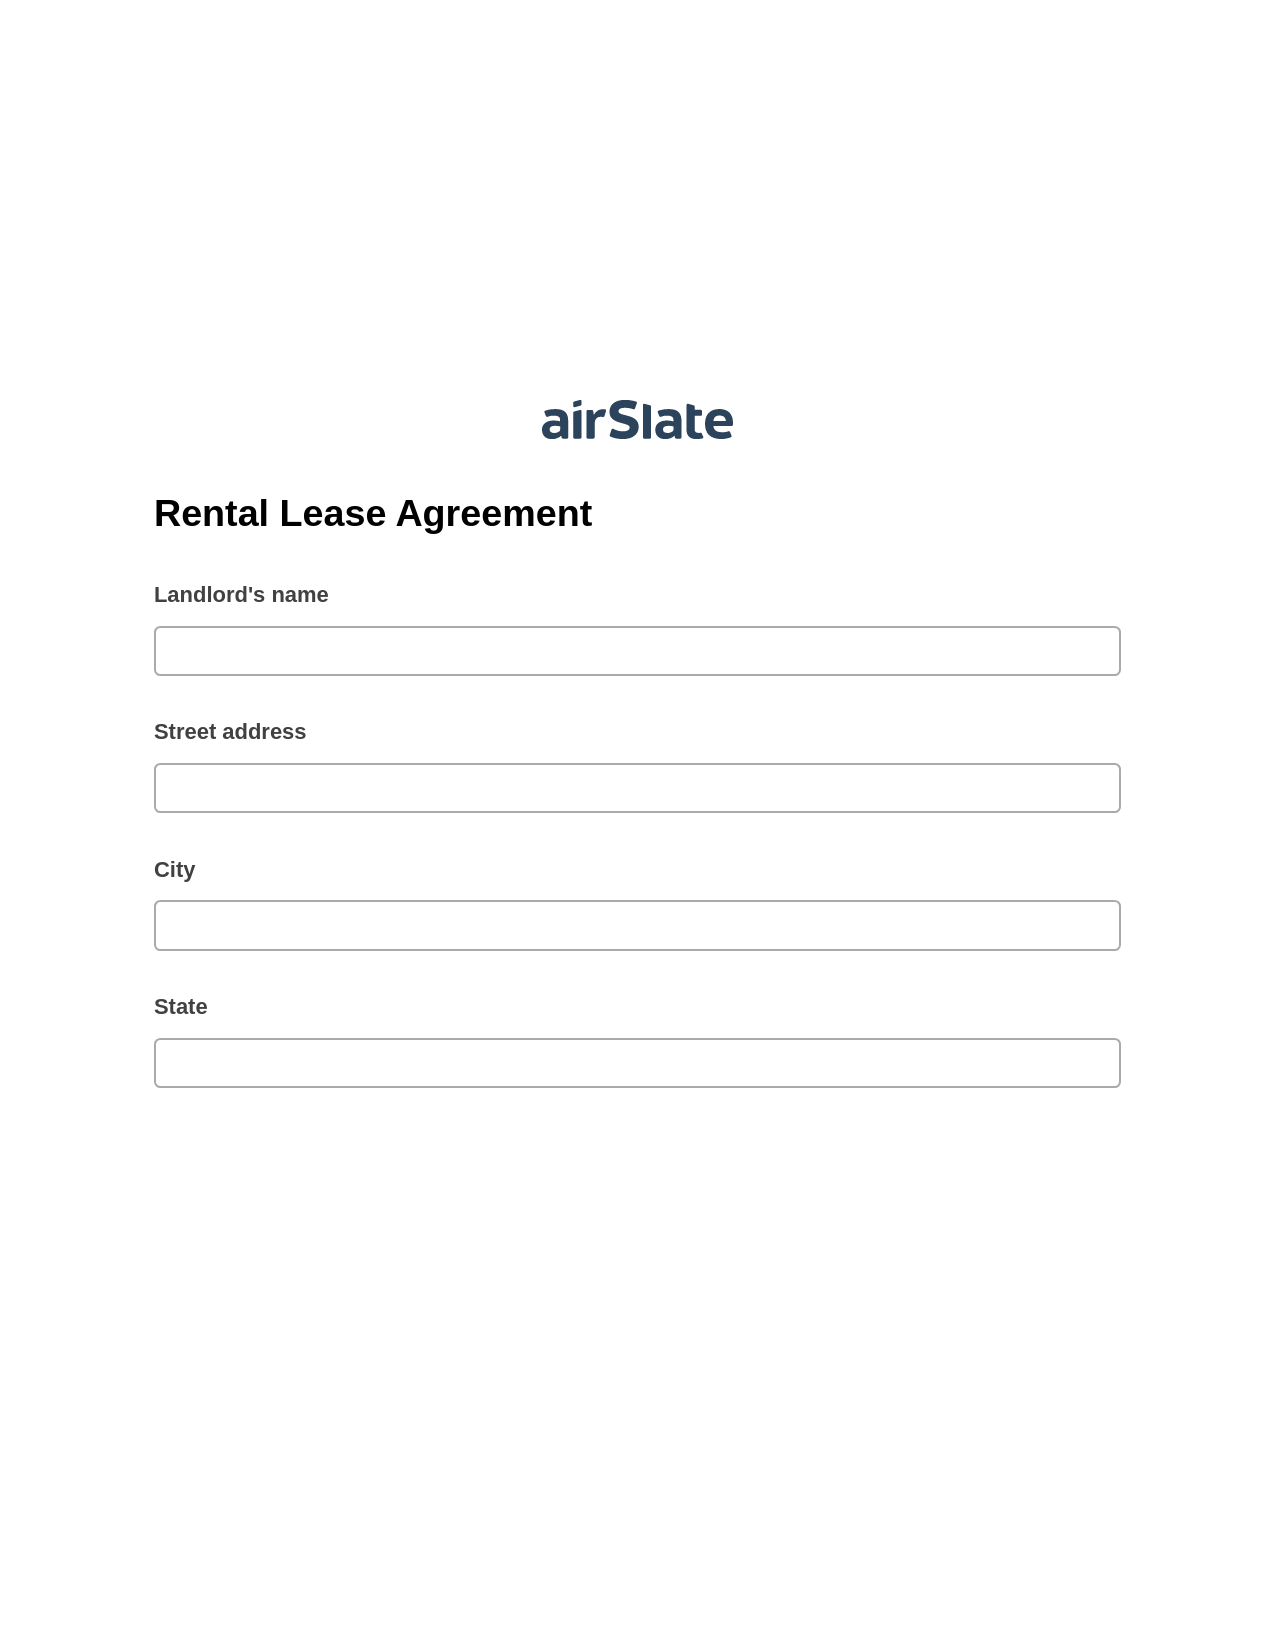 Multirole Rental Lease Agreement Pre-fill from Google Sheet Dropdown Options Bot, Create Slate Reminder Bot, Slack Notification Postfinish Bot